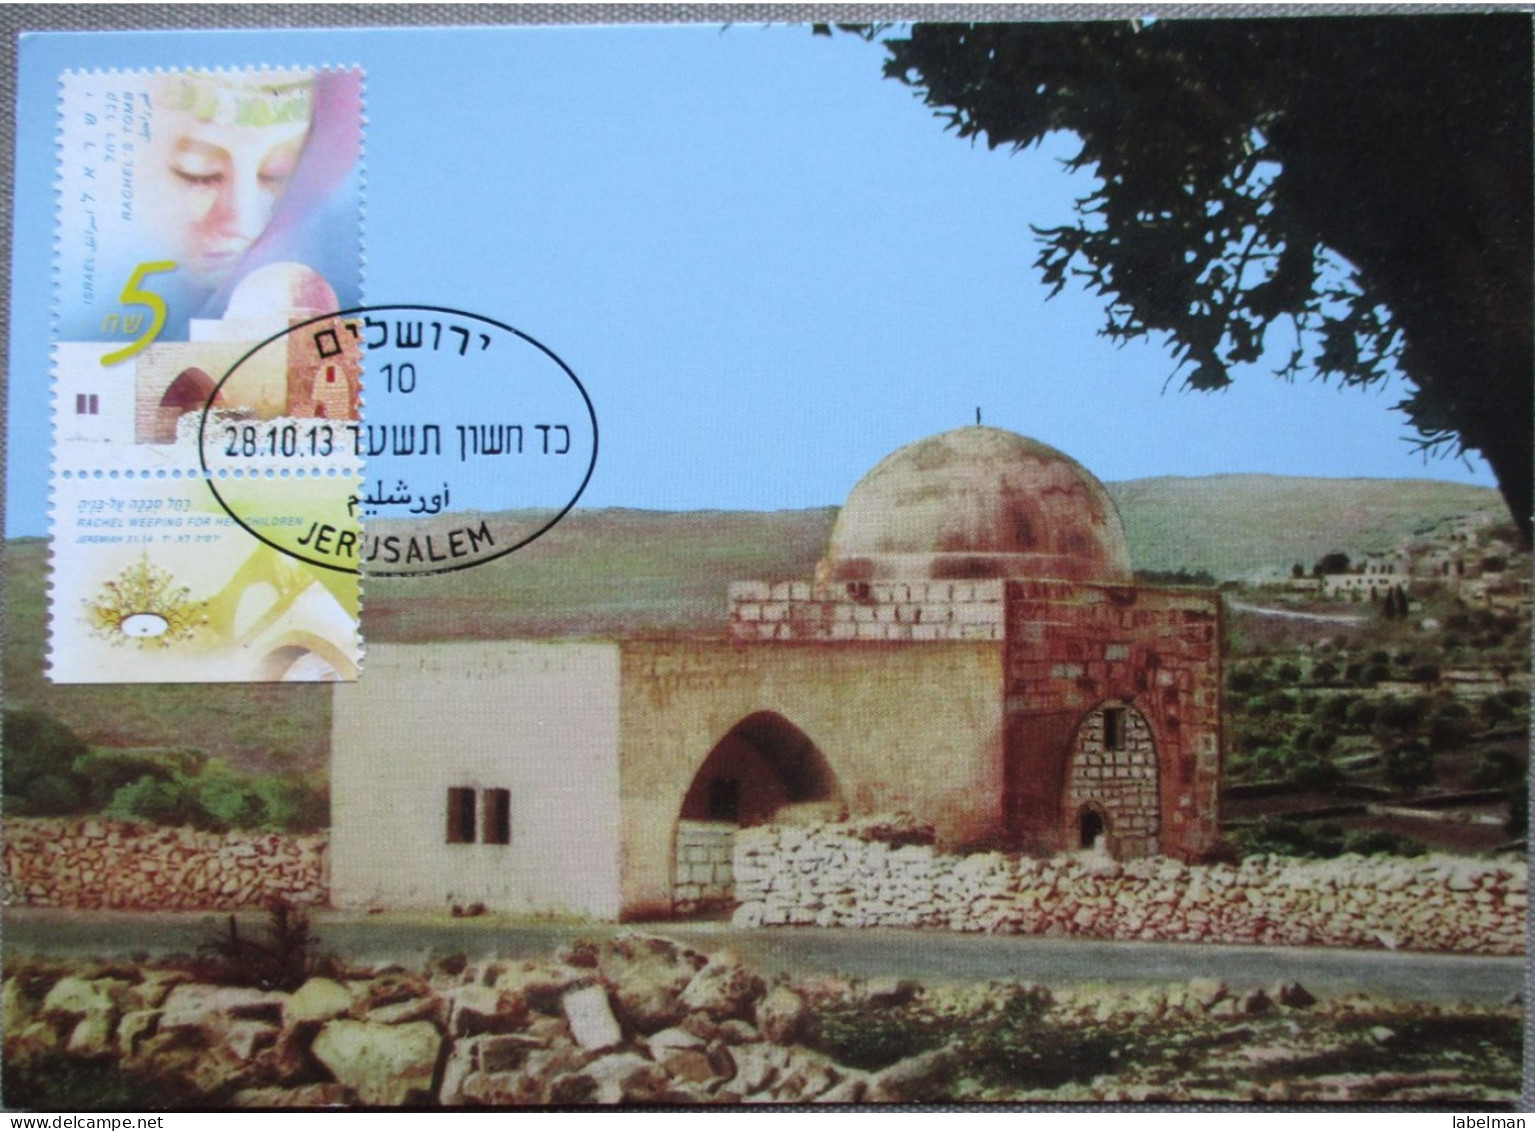 ISRAEL 2013 MAXIMUM CARD POSTCARD BETHLEHEM RACHEL TOMB FIRST DAY OF ISSUE CARTOLINA CARTE POSTALE POSTKARTE CARTOLINA - Tarjetas – Máxima